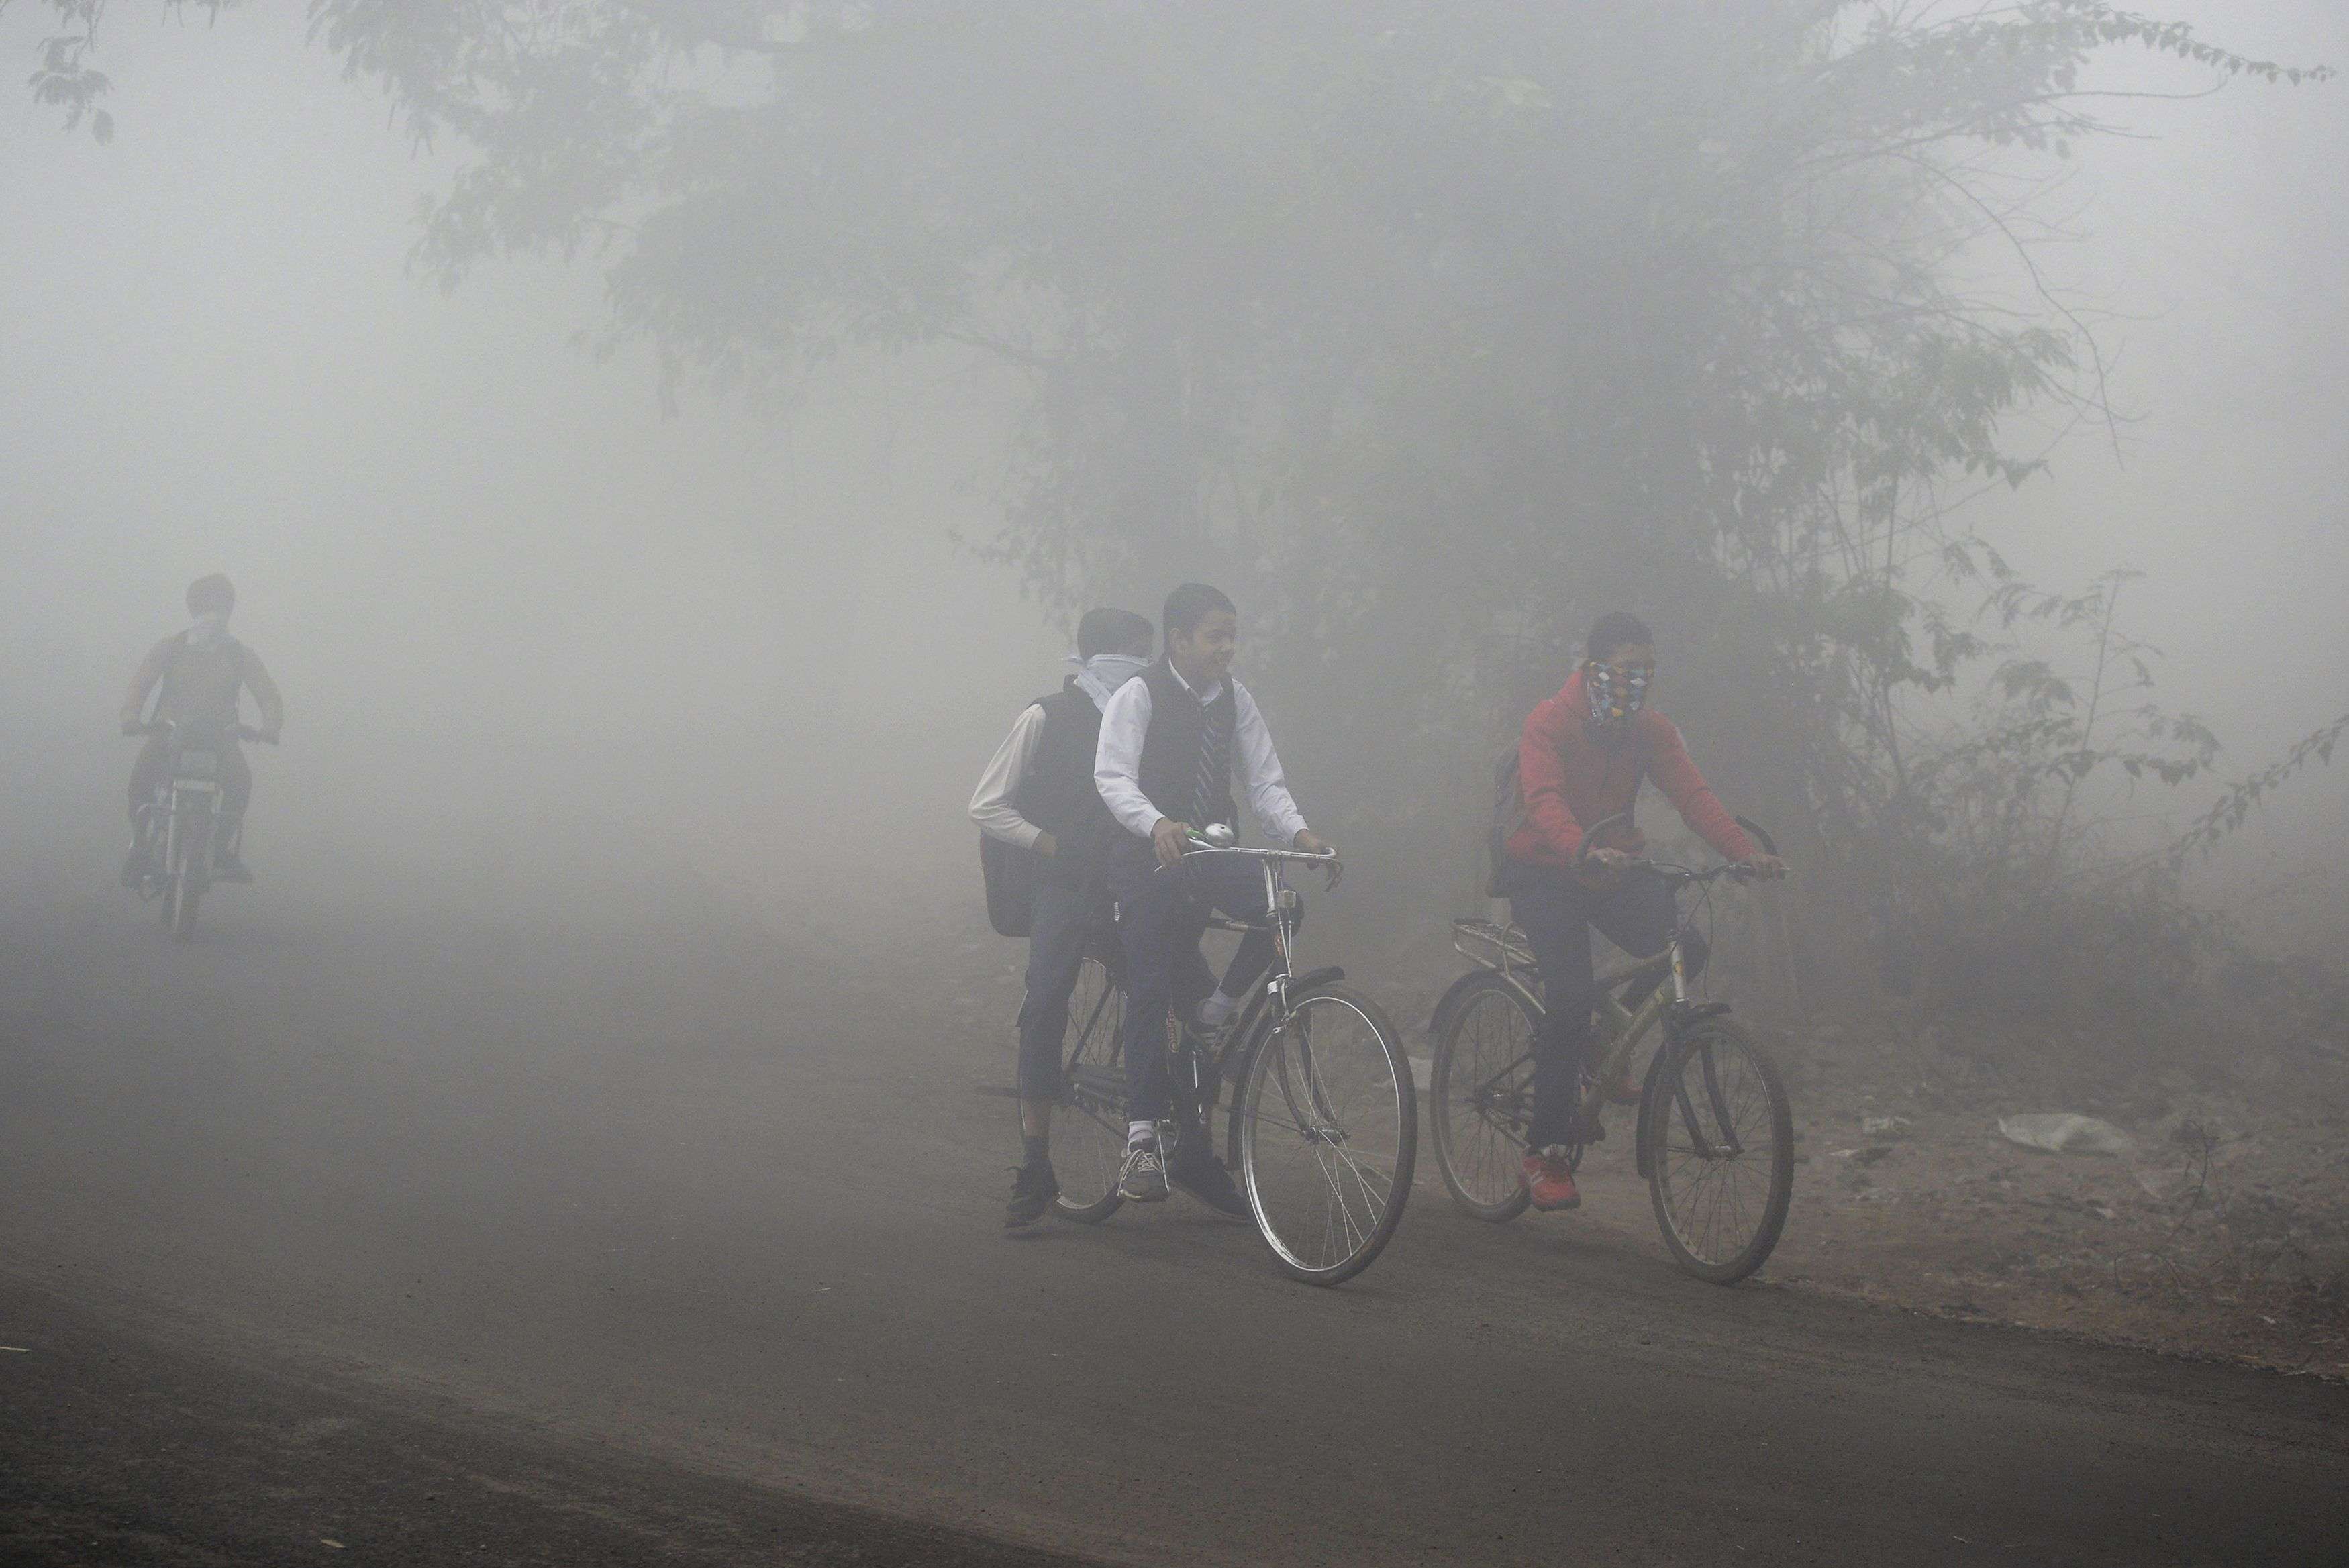 Stubble burning the main villain behind poor air in Delhi: HC